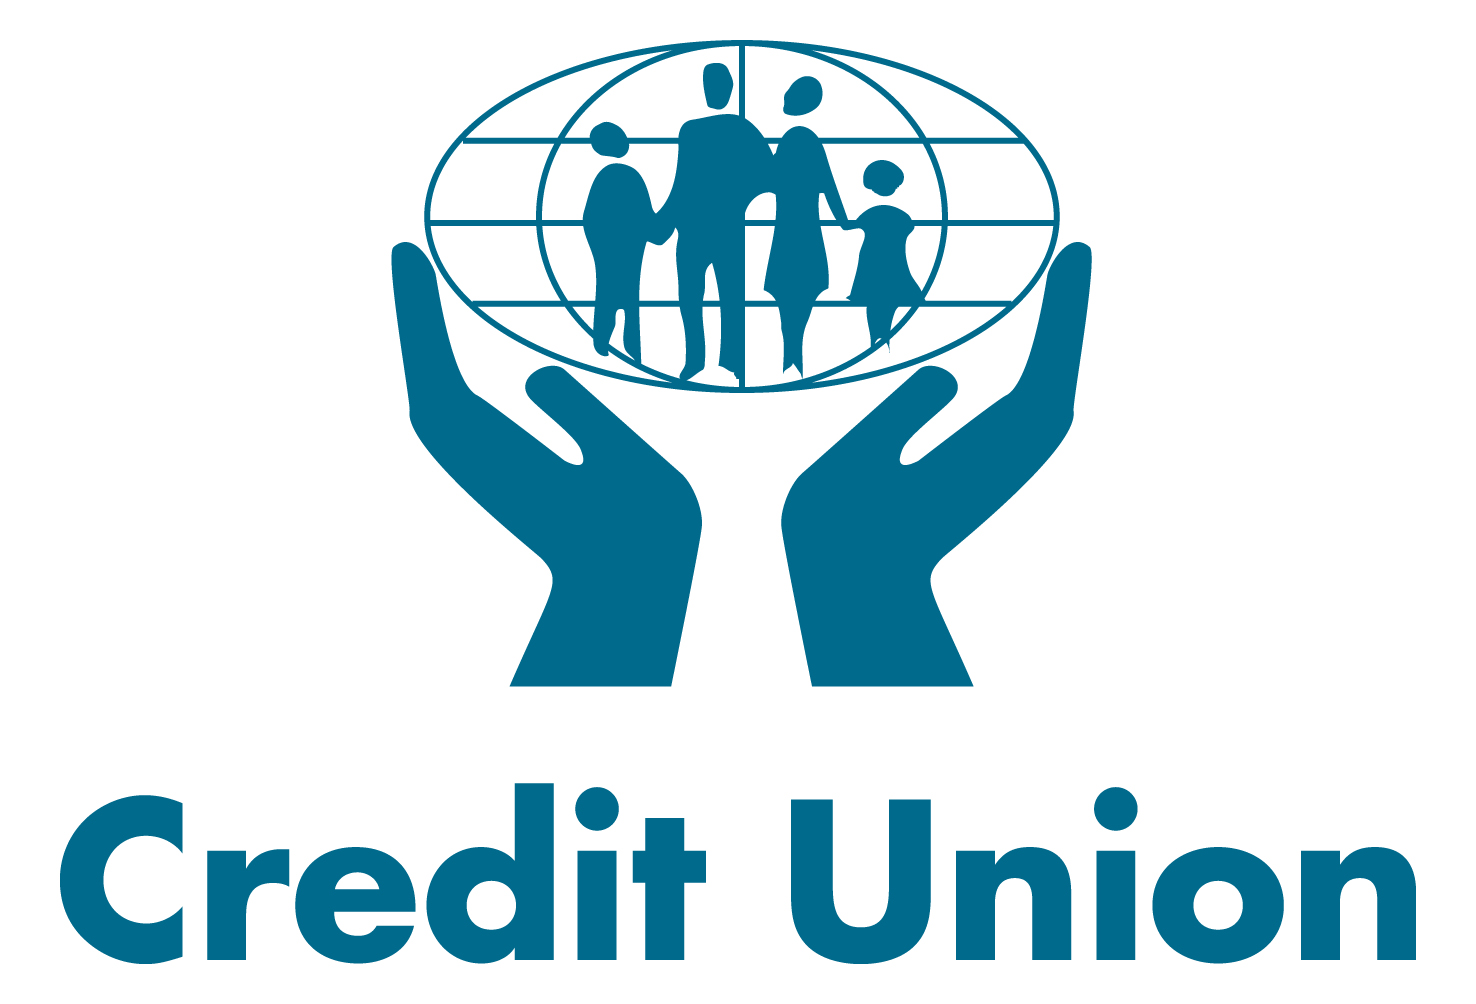 Credit Union and guerrilla marketing